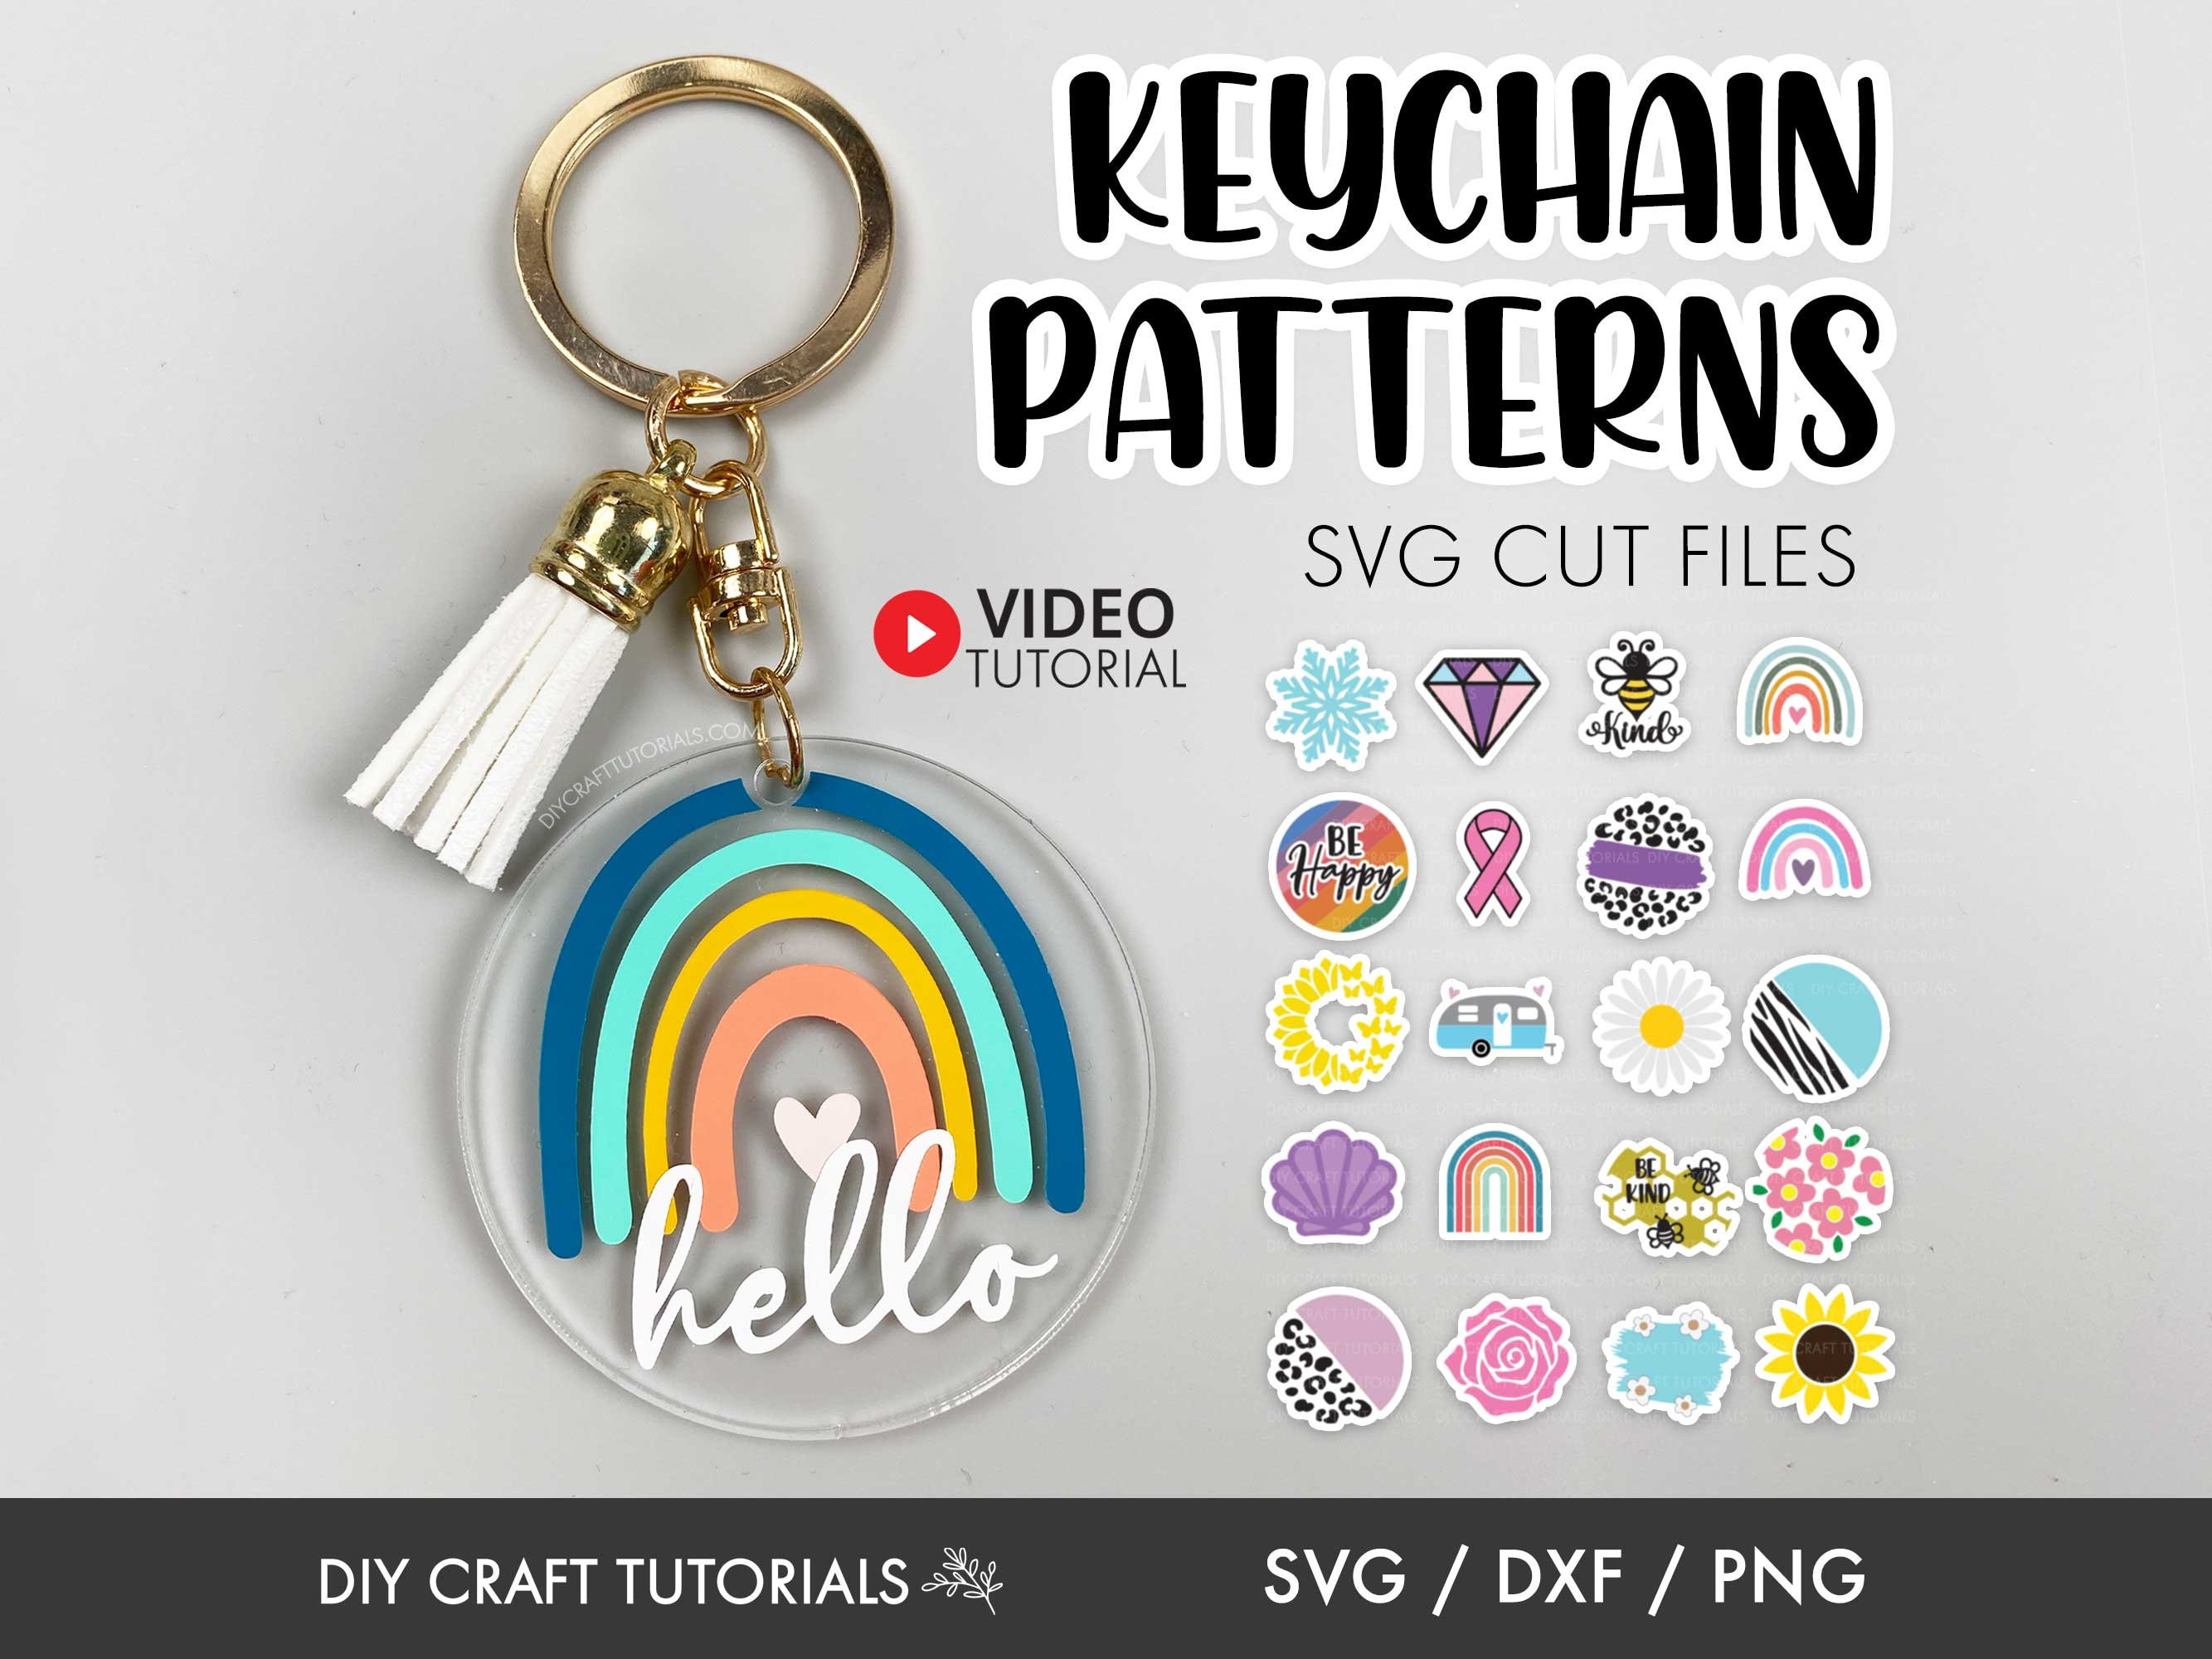 Double Keychain Display Card SVG, Keychain Packaging, Keychain Svg,  Packaging Svg, Svg Cut File, Svg for Cricut, Svg Bundle, Keychain Holder 